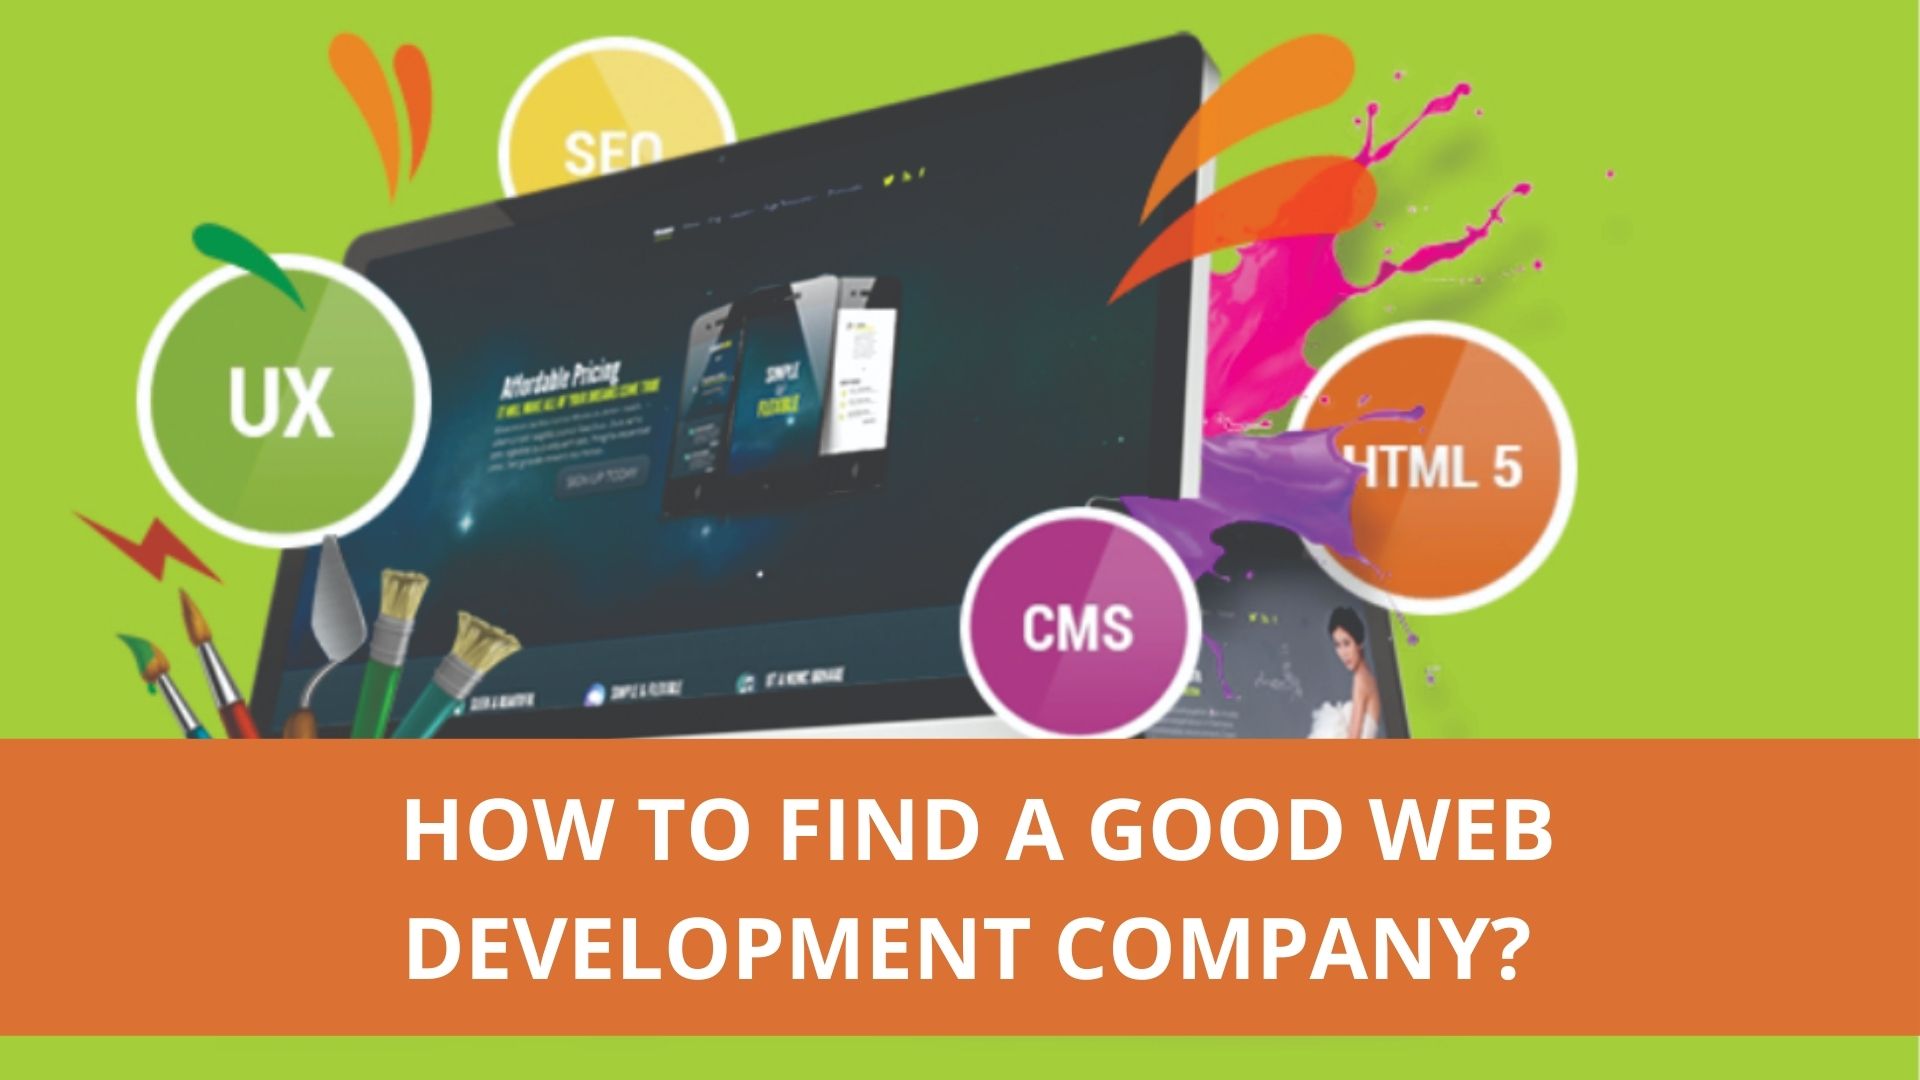 Web Development Services